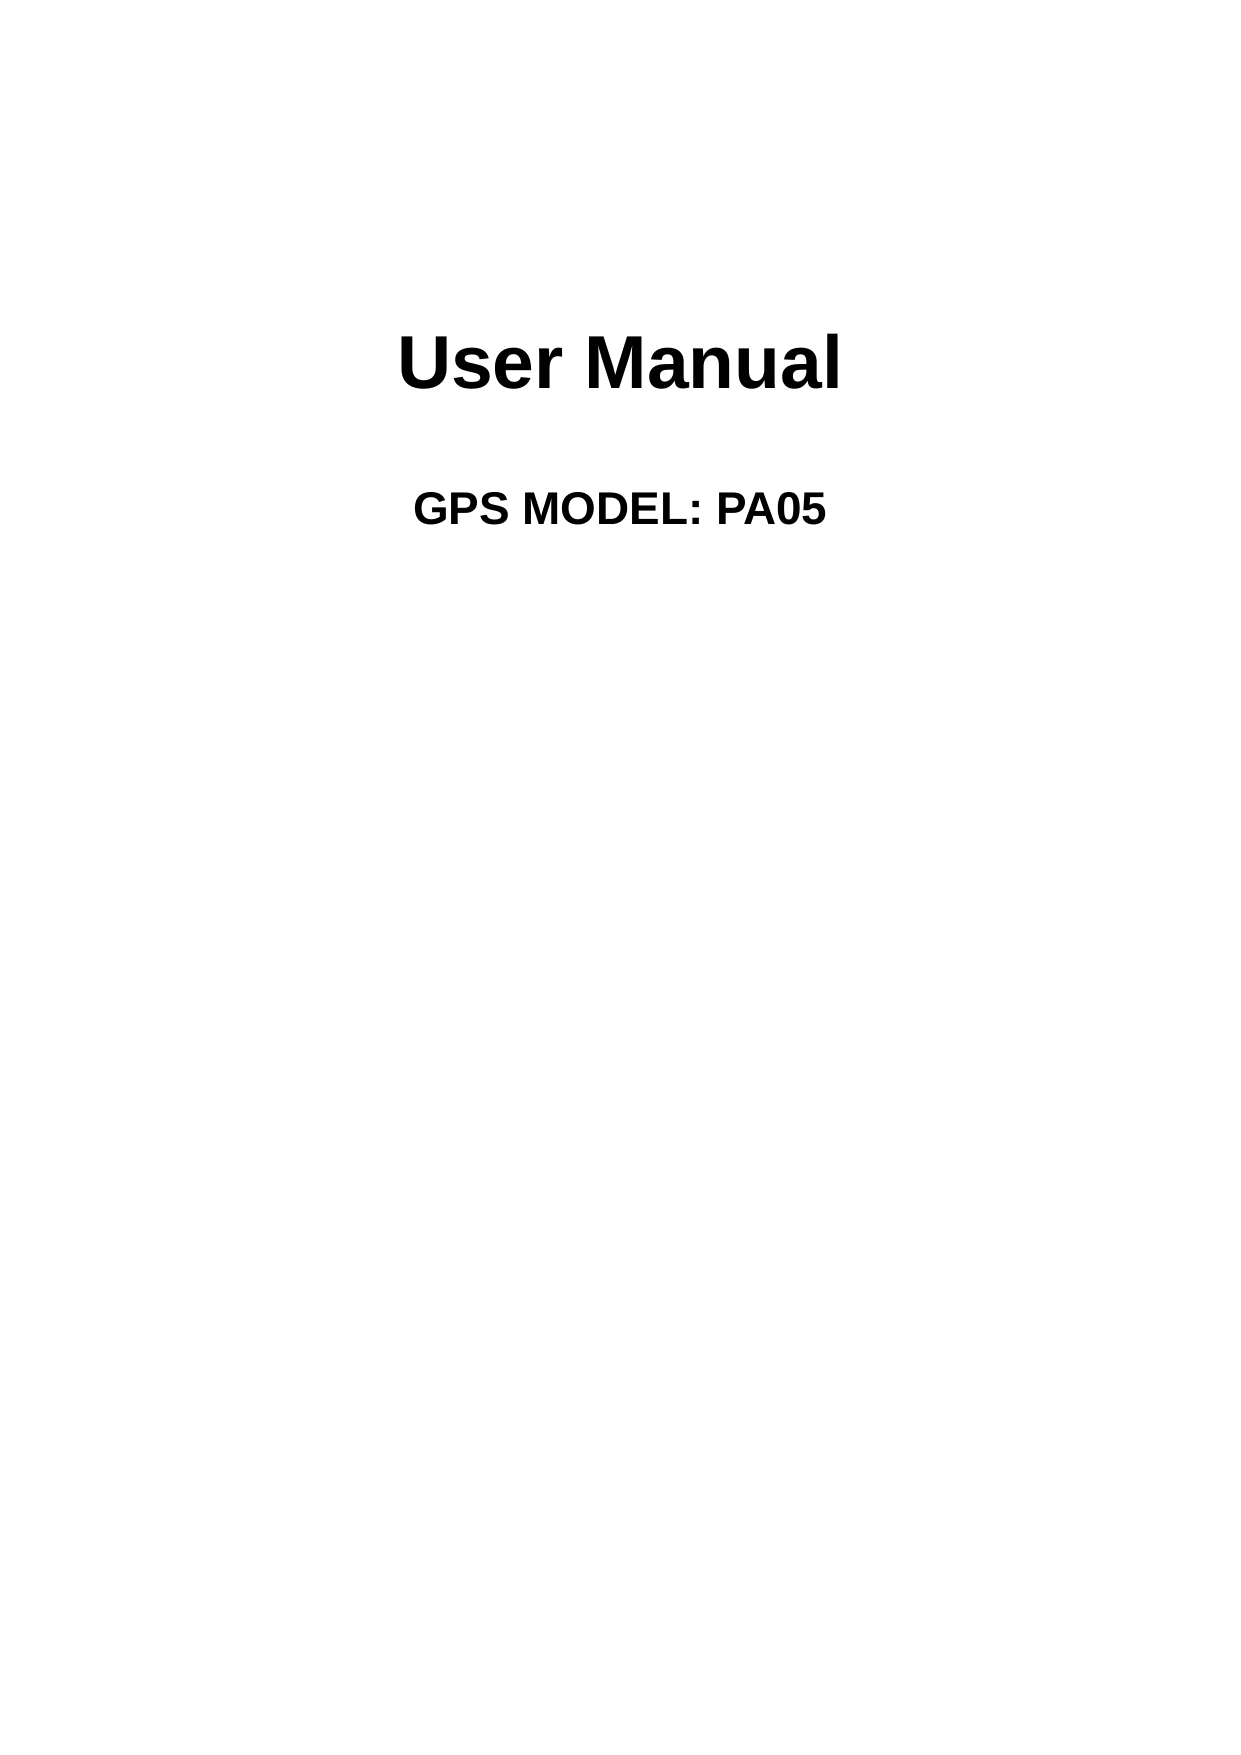    User Manual  GPS MODEL: PA05       